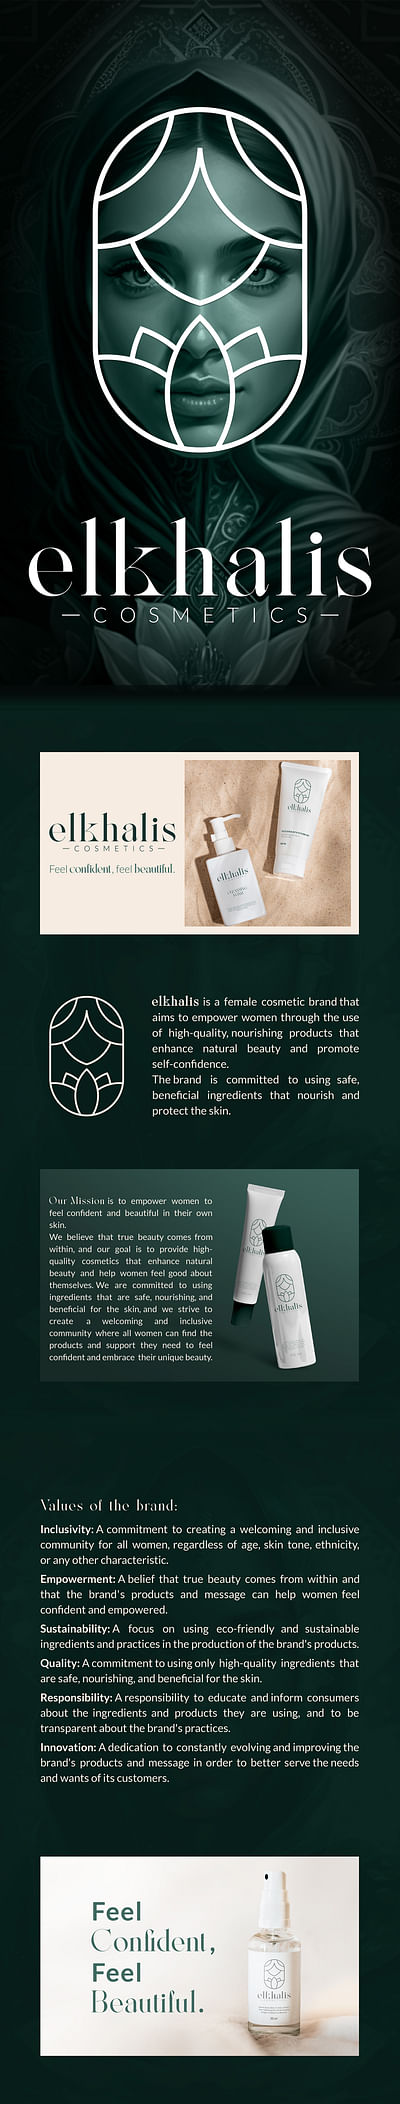 ELKHALIS | Identity Cosmetic brand - Branding & Positioning